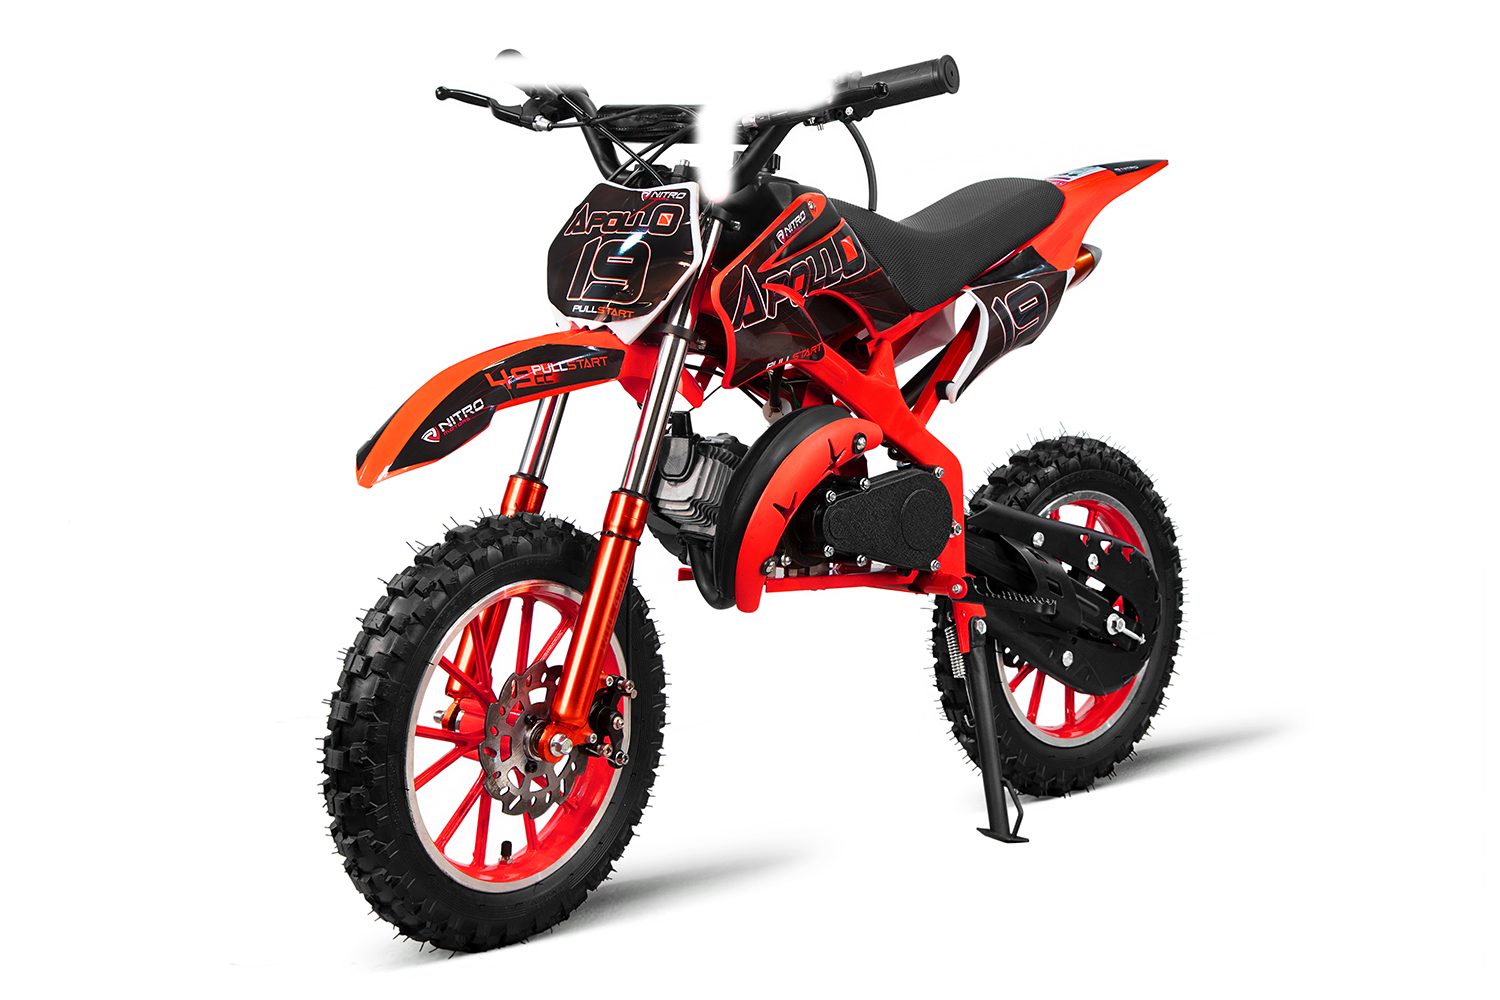 großer Release-Sale Smarty Dirt-Bike Nitro Apollo Pullstart Crossbike 49cc 10 Zoll Dirtbike Rot Motors